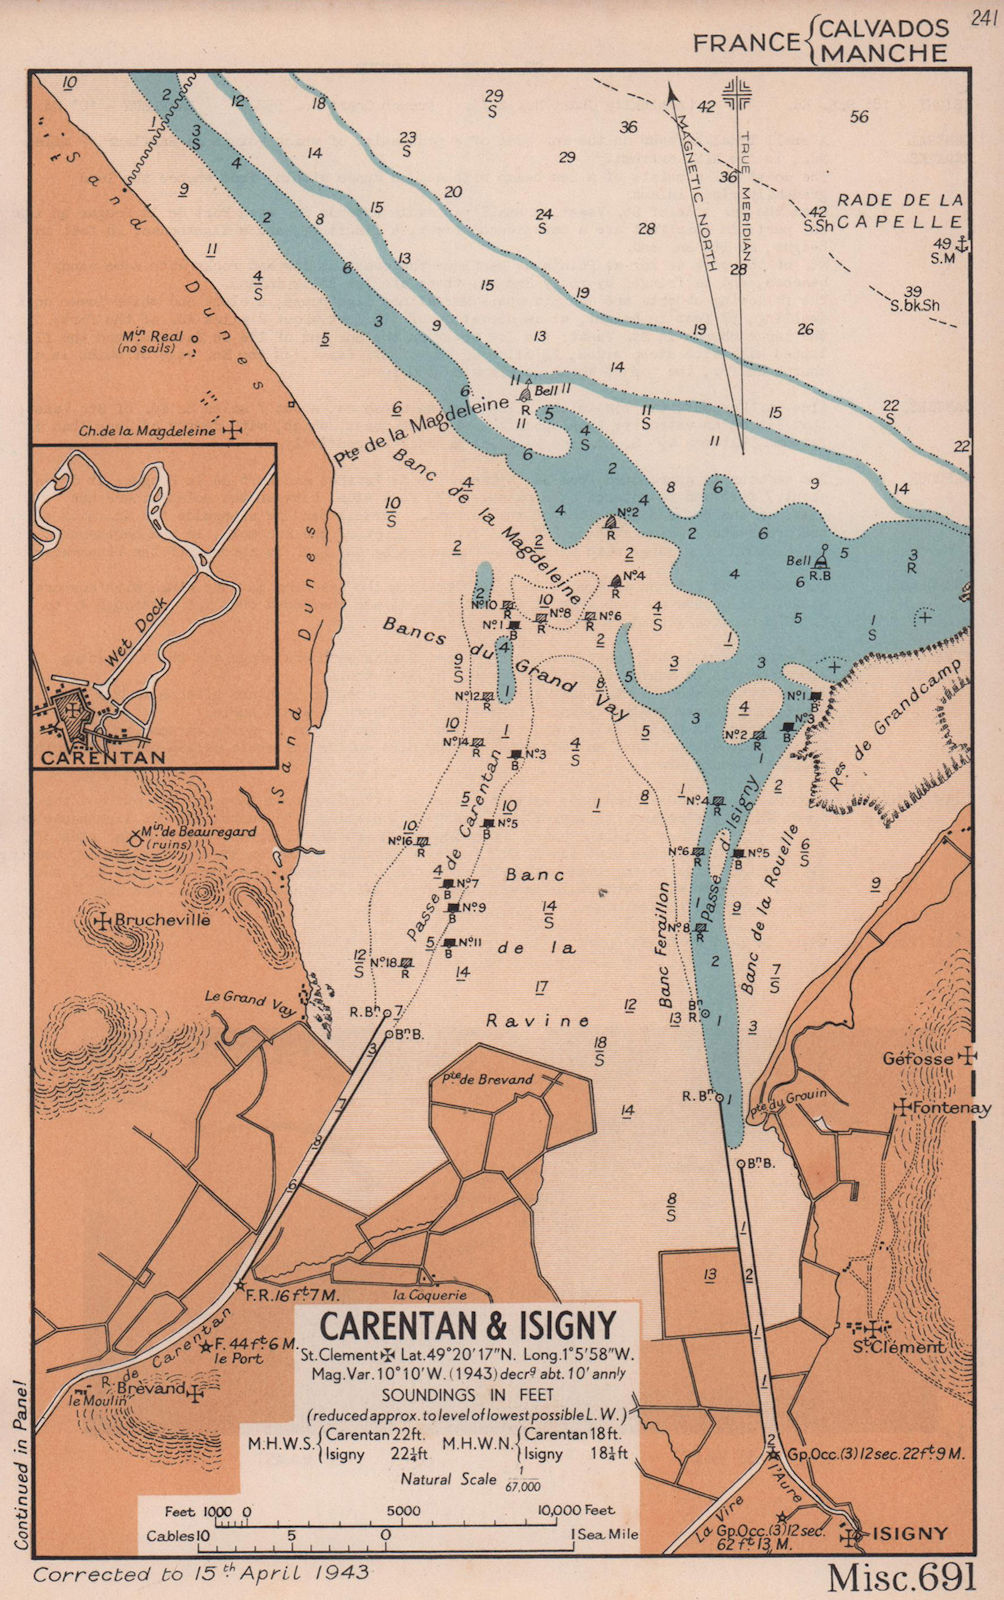 Carentan & Isigny sea coast chart D-Day planning map. Utah beach. ADMIRALTY 1943